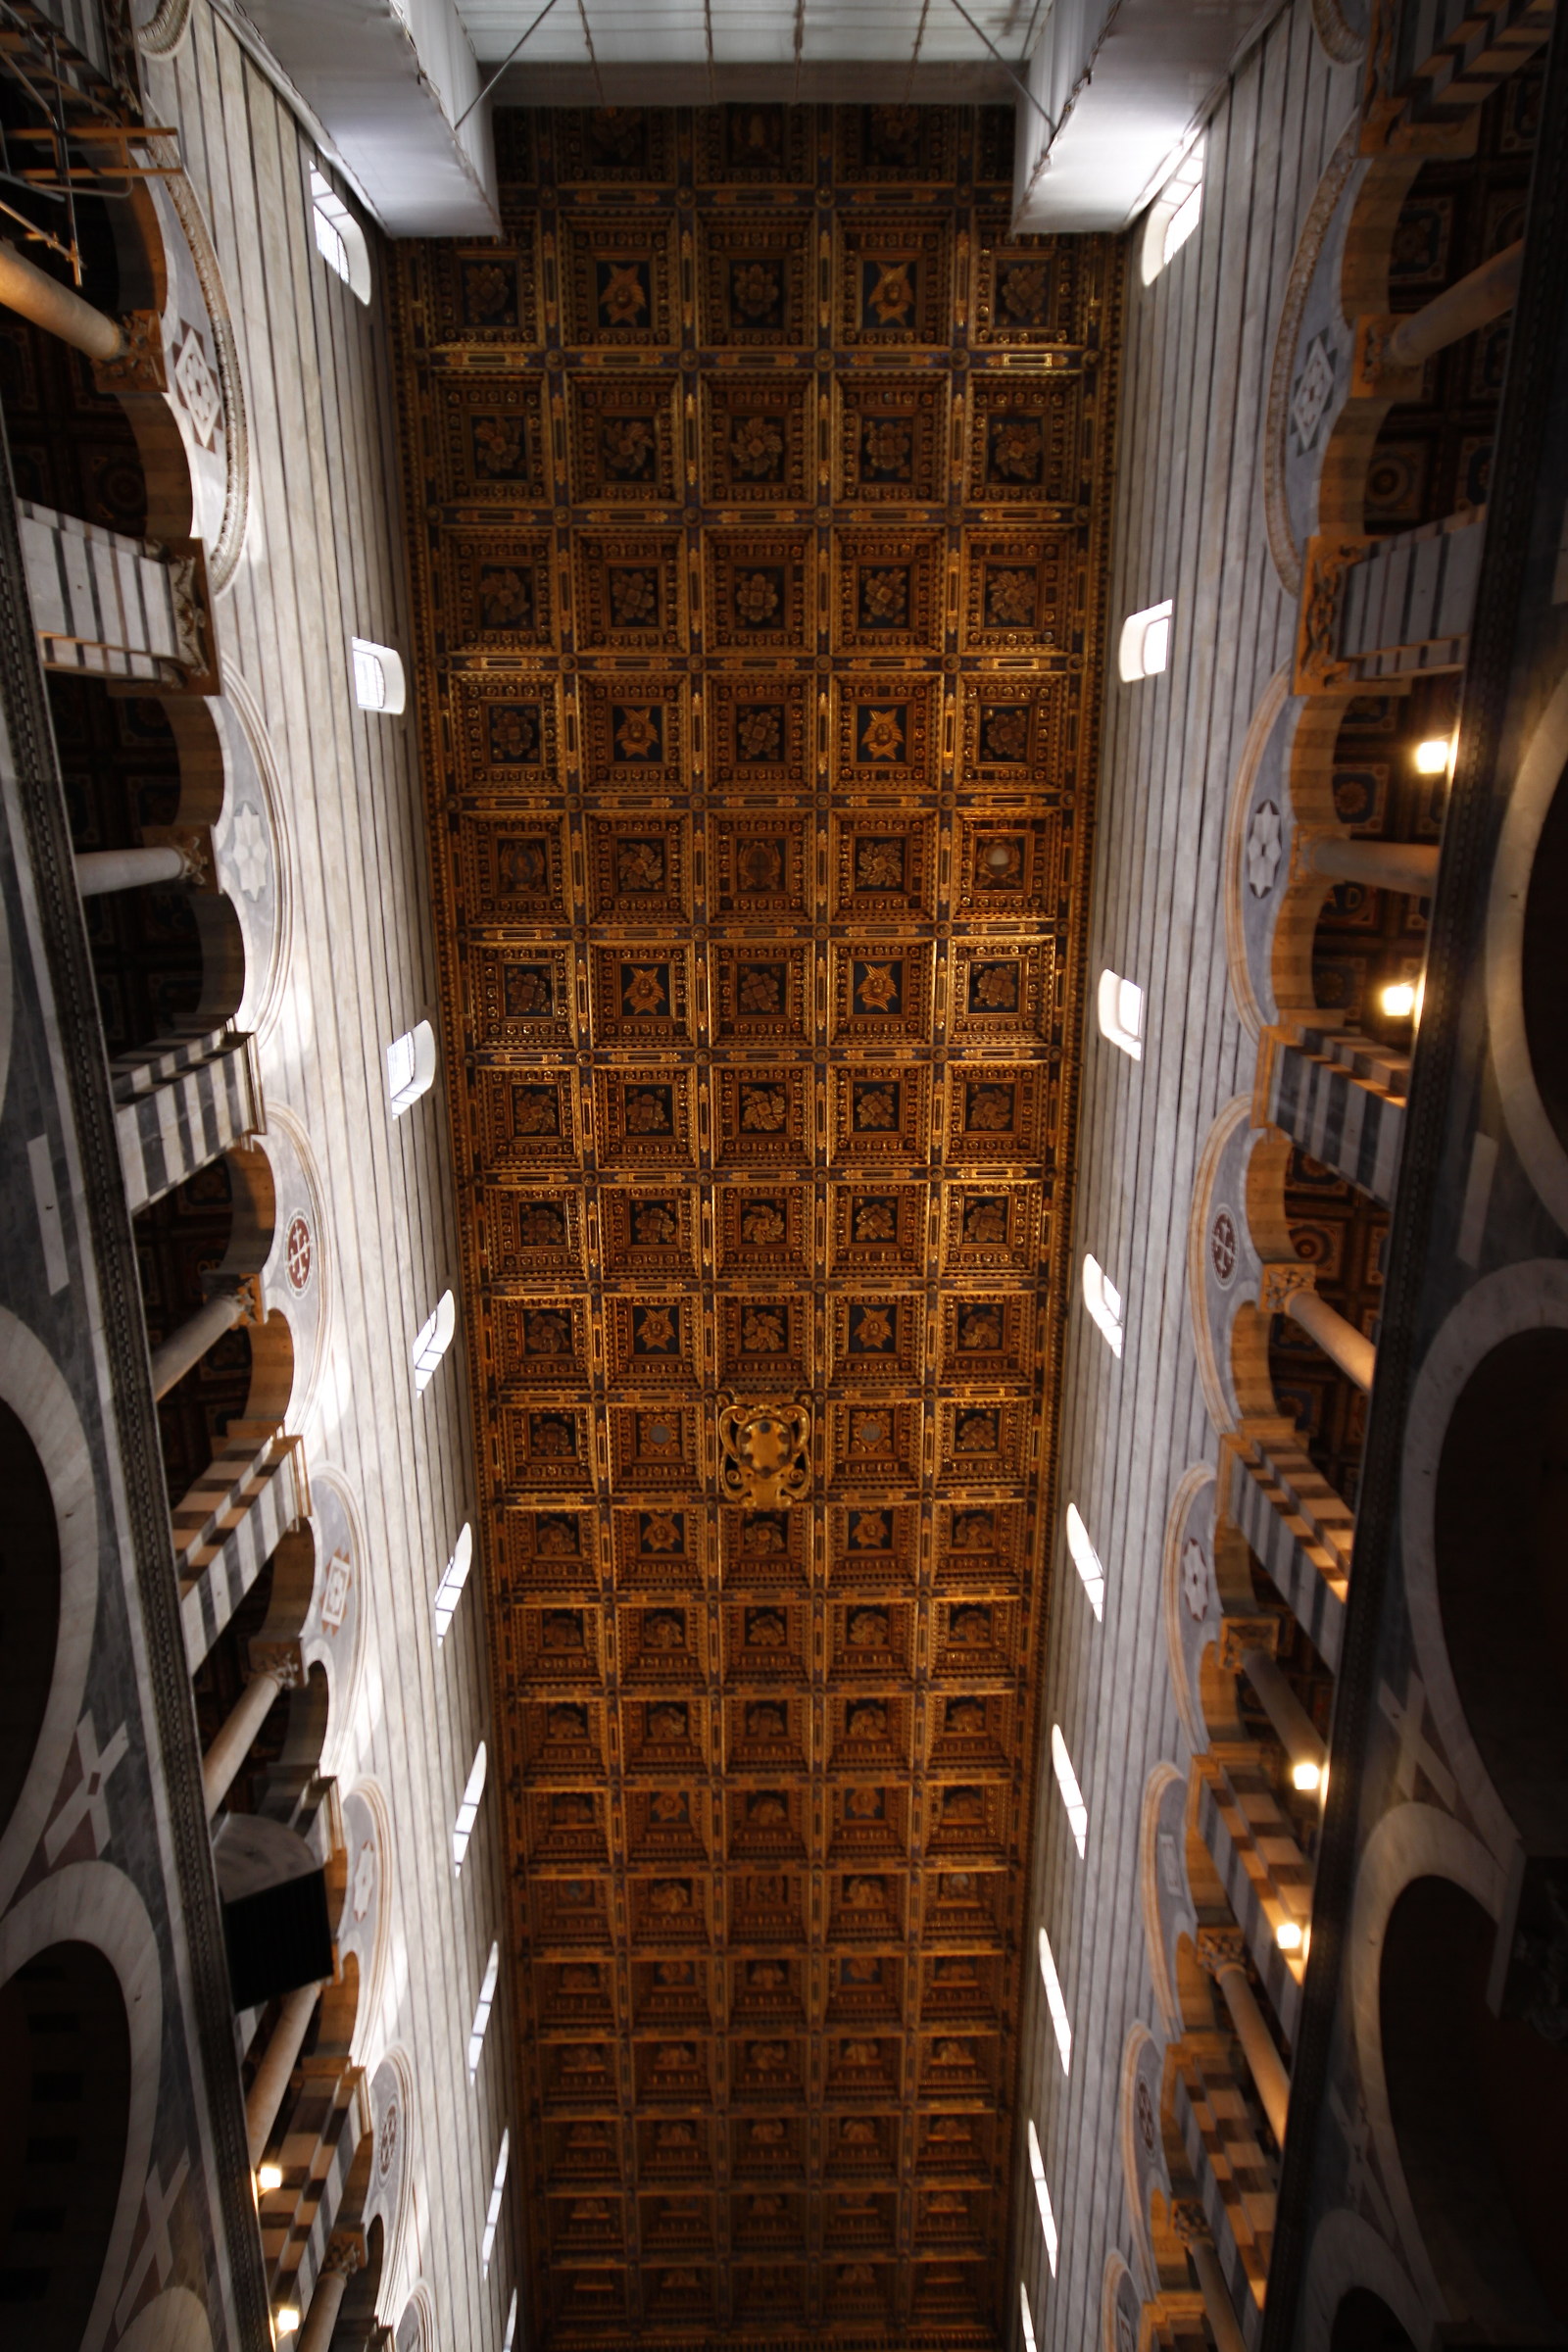 Ceiling of the Duomo of Pisa...